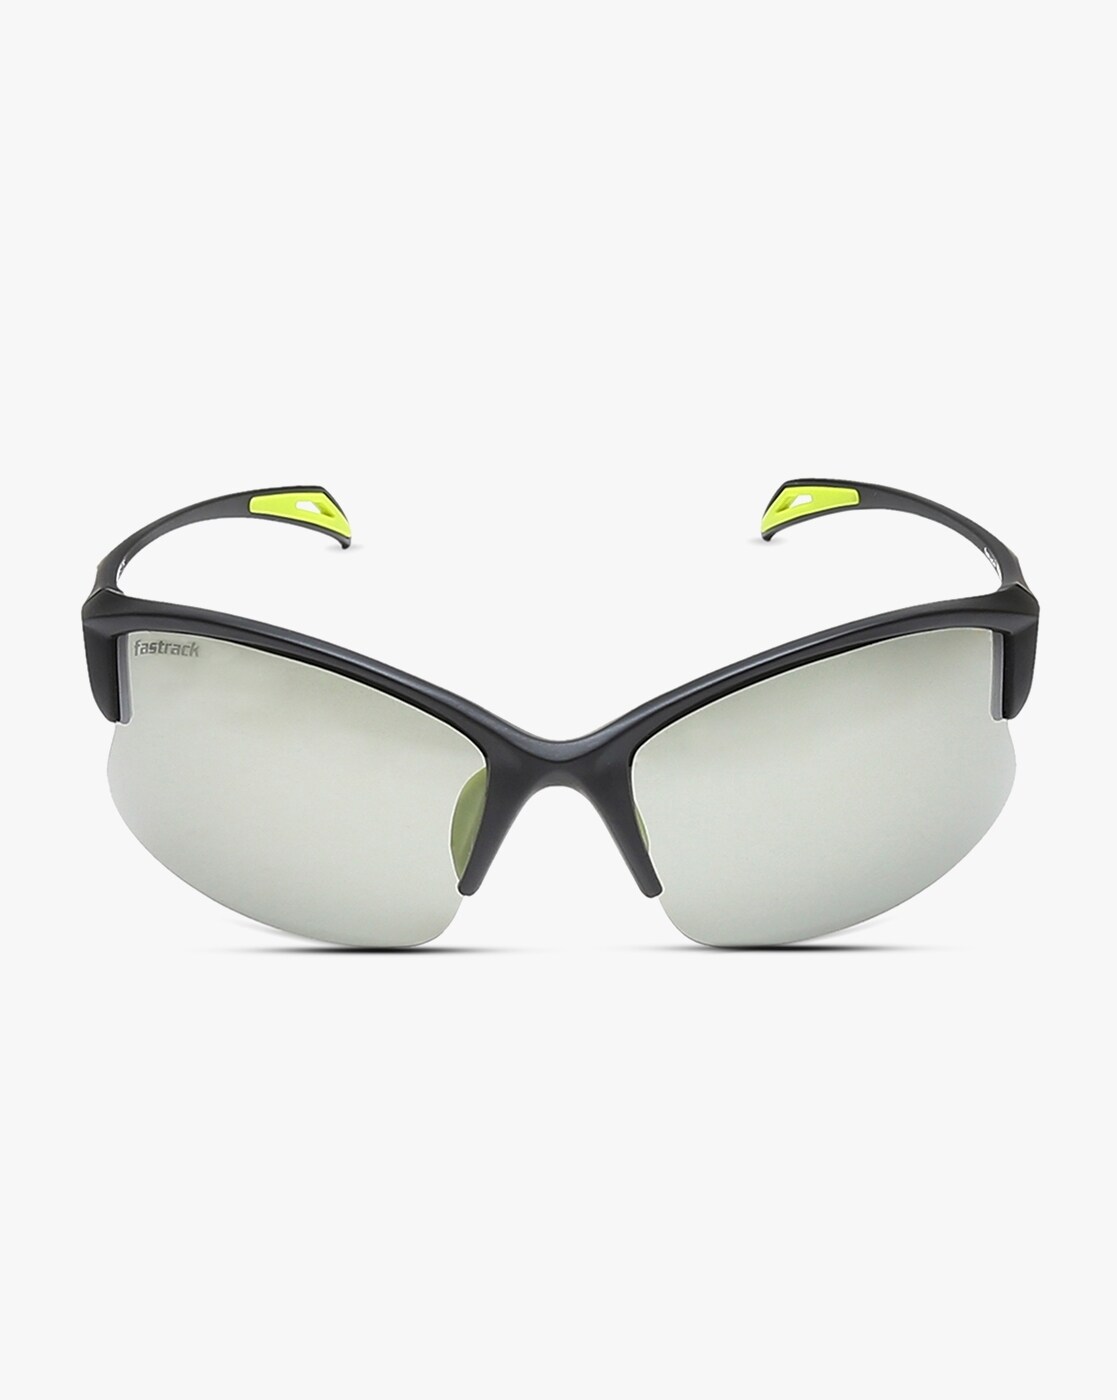 Buy Latest Sunglasses, Goggles, Shades Online | Fastrack Eyewear